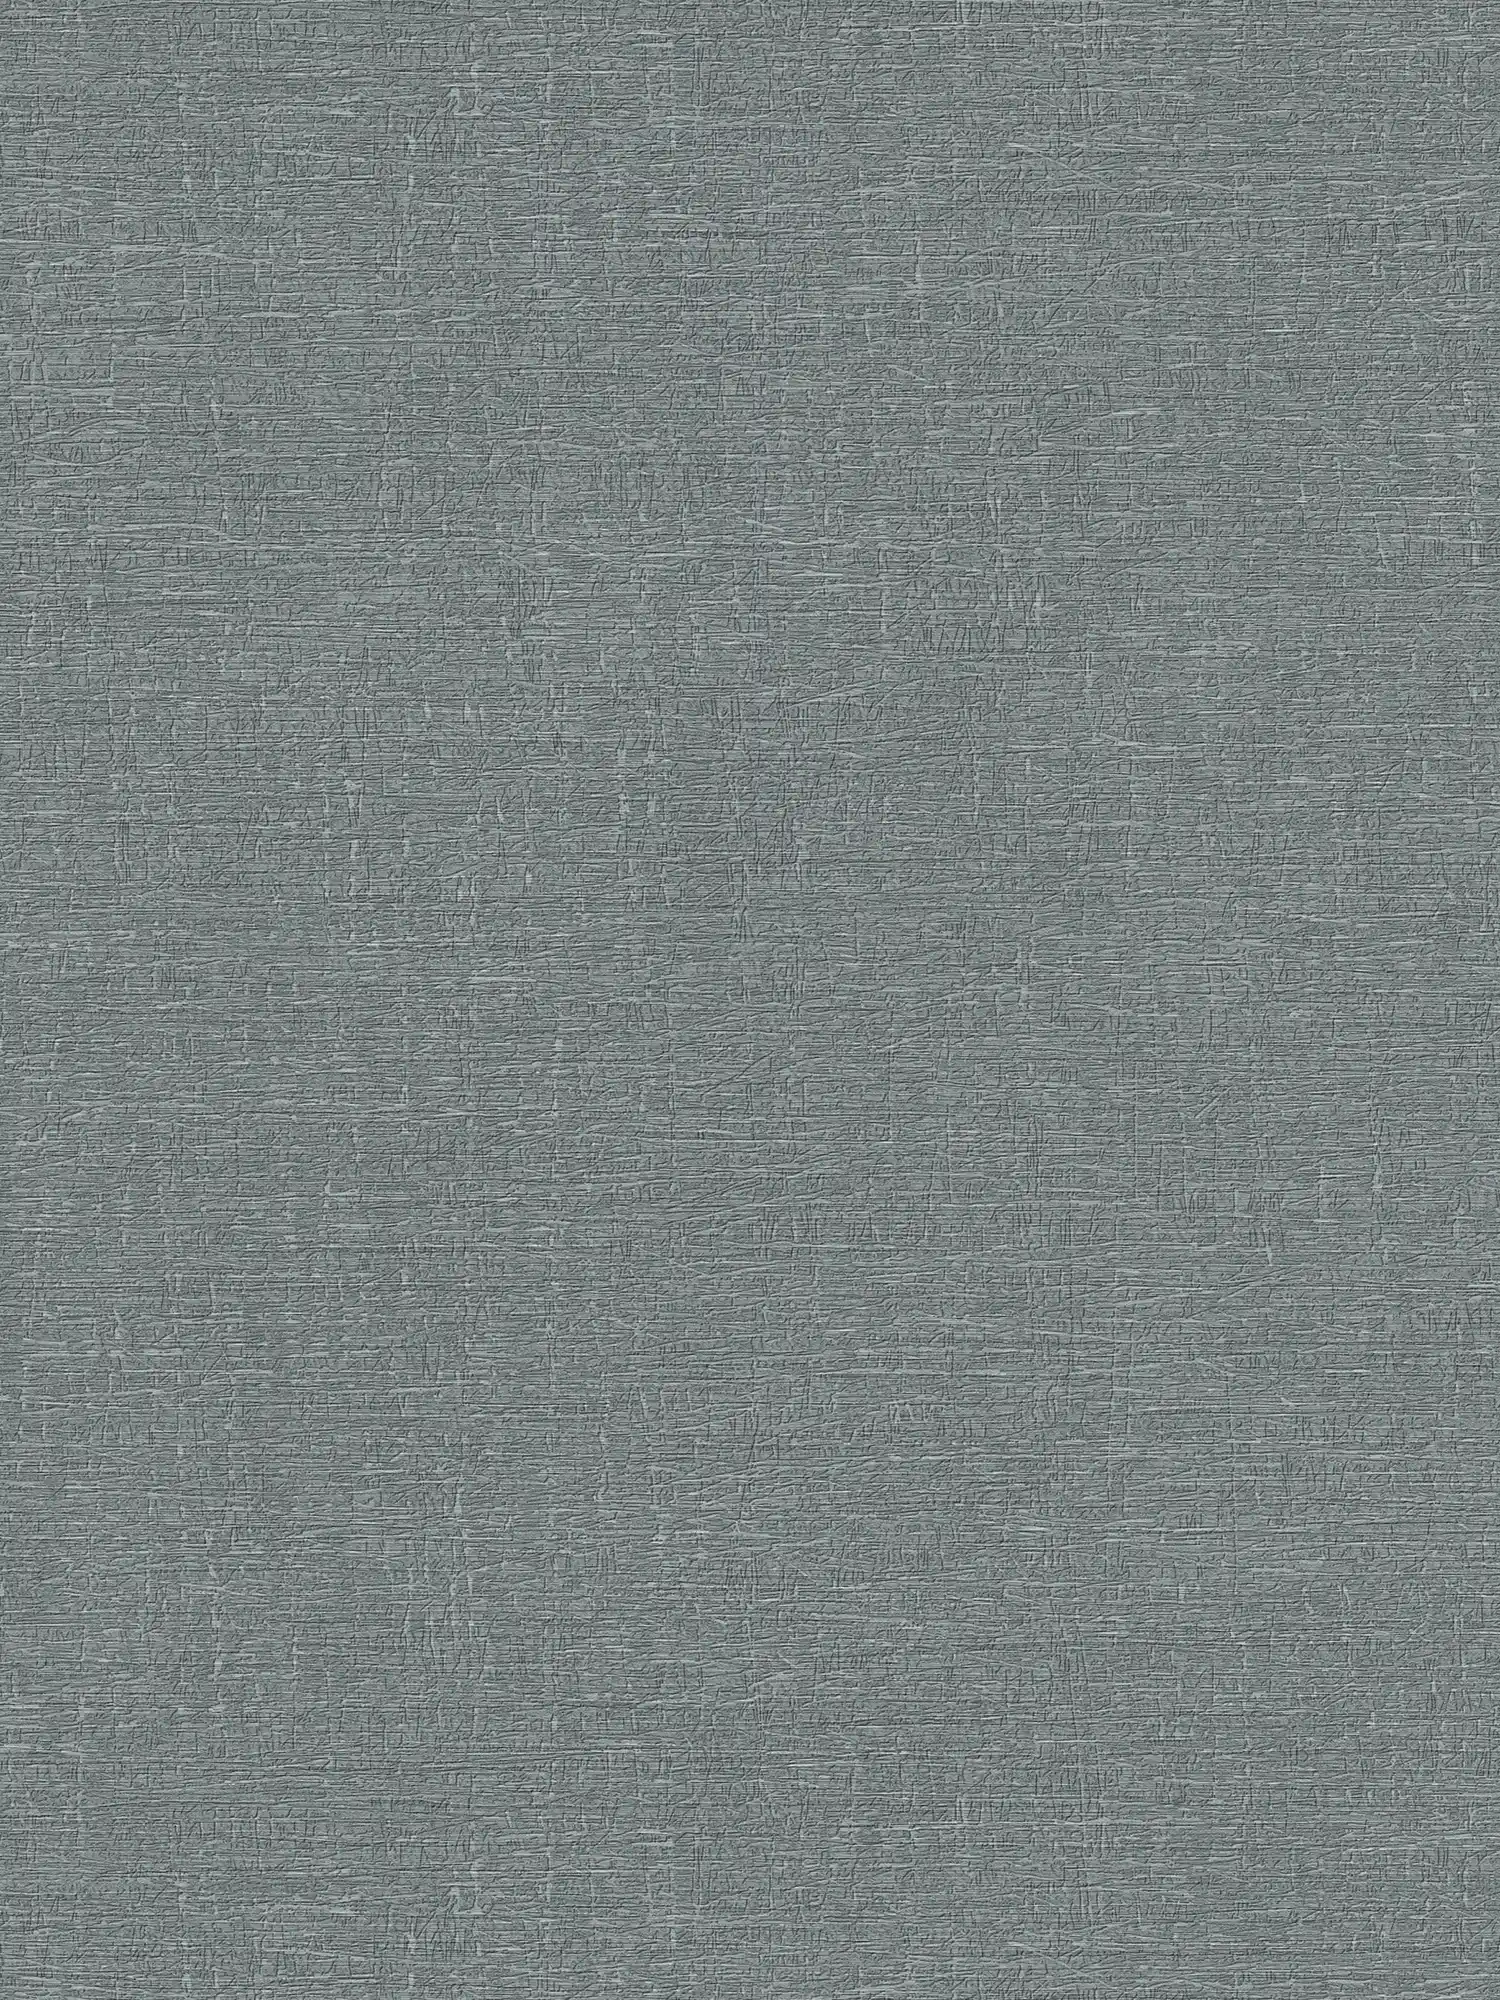 Papel pintado no tejido de aspecto textil con textura ligera - gris
